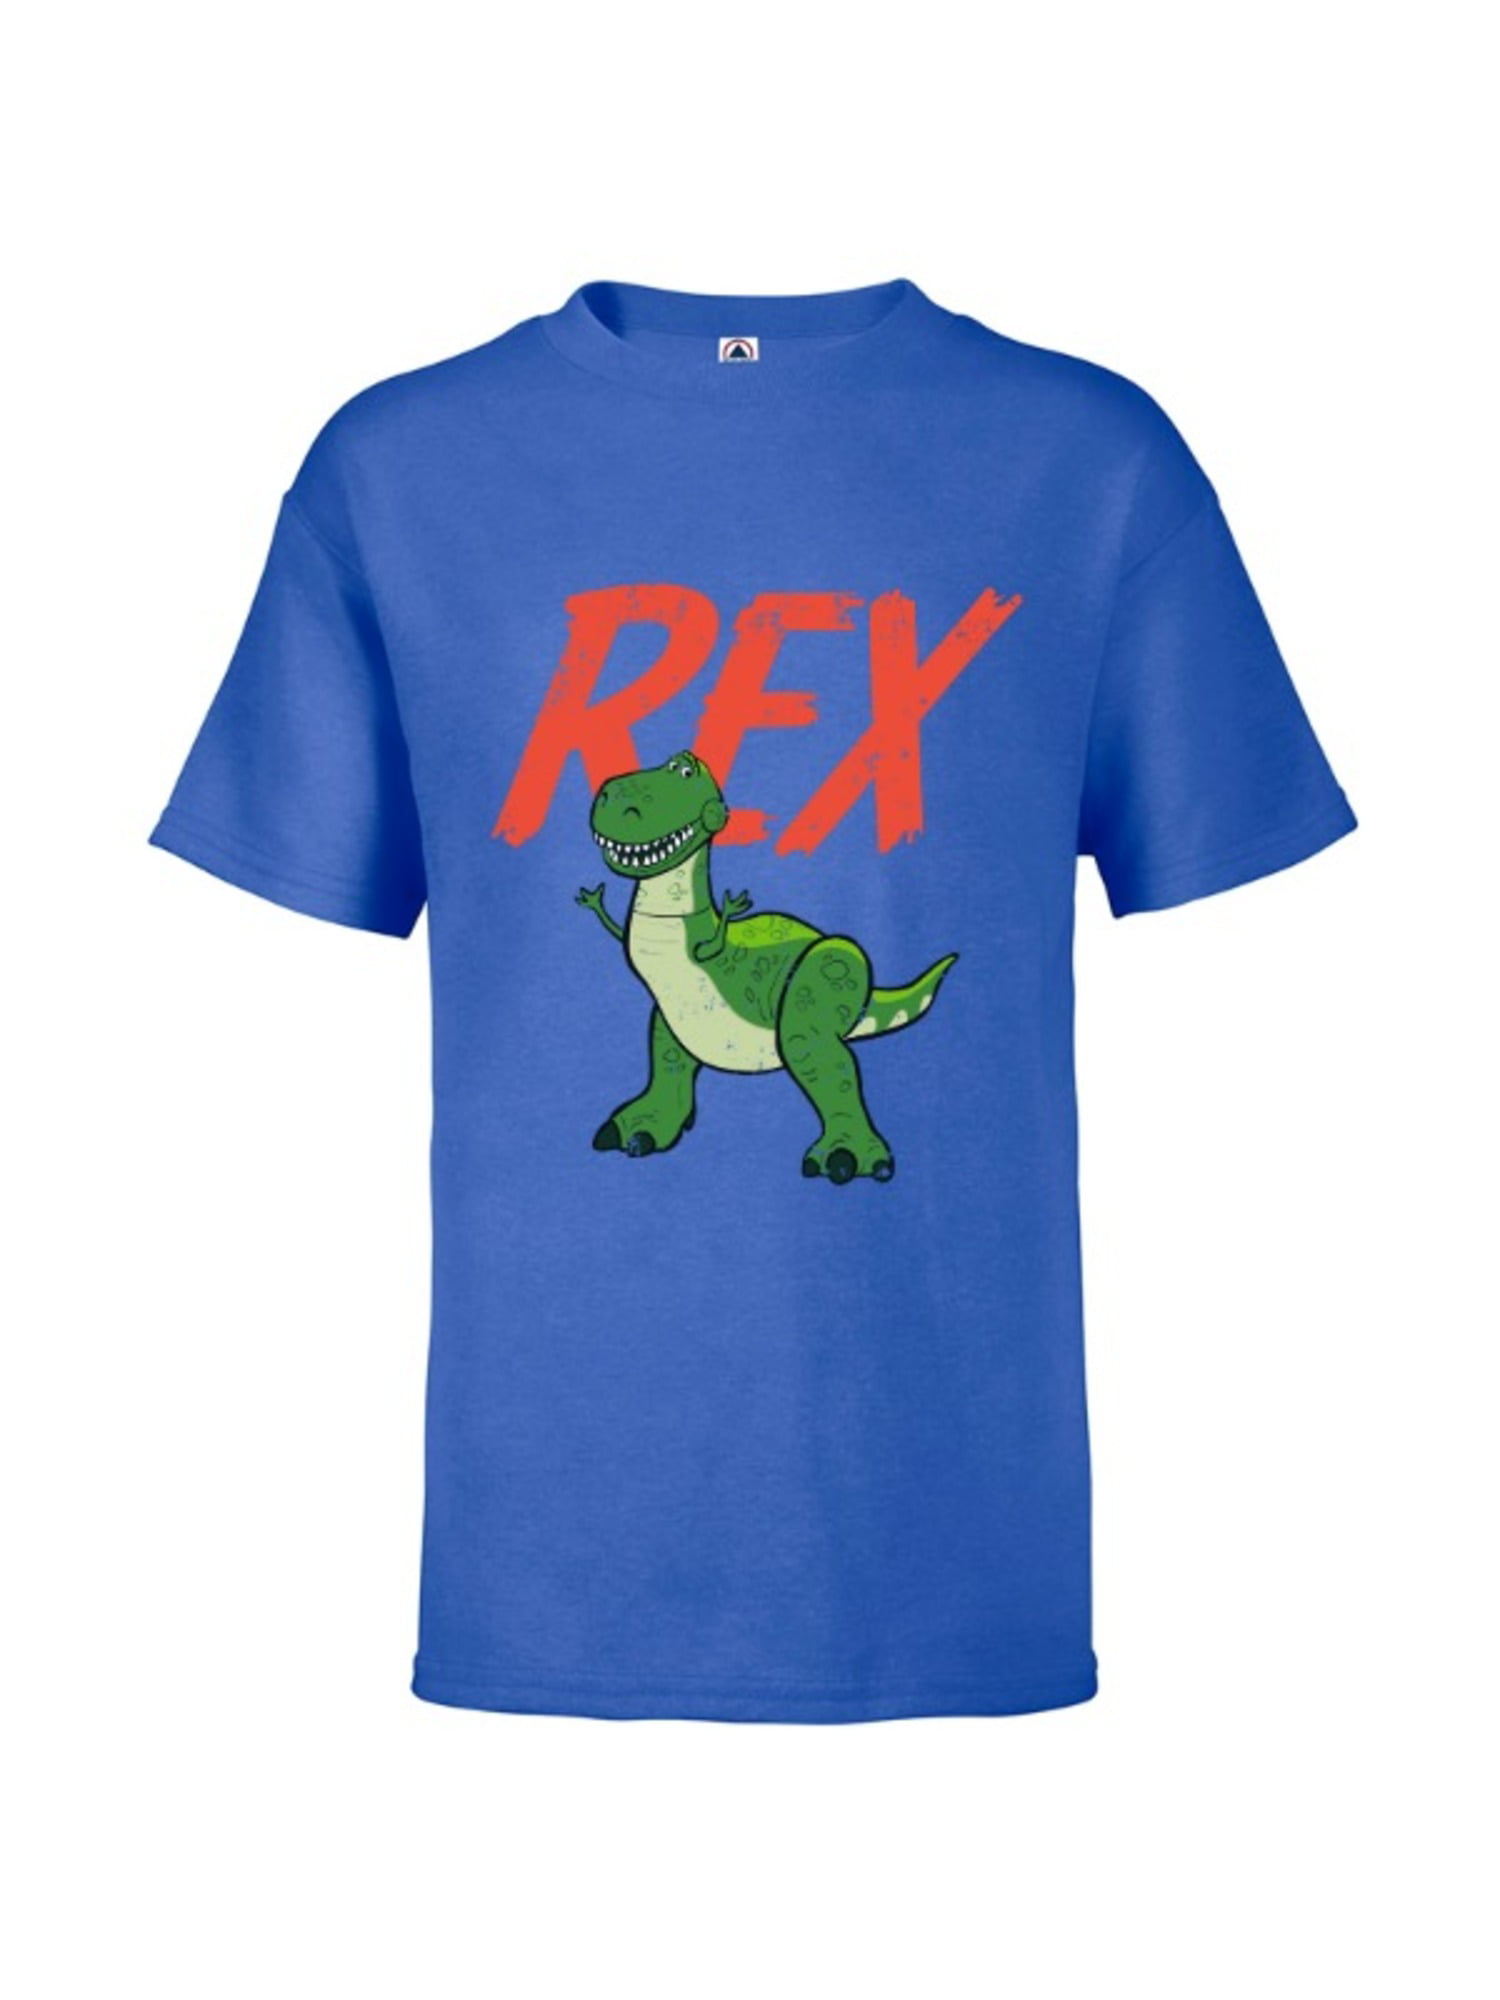 Boys dinosaur skateboard short and shirt set tan customization available see details